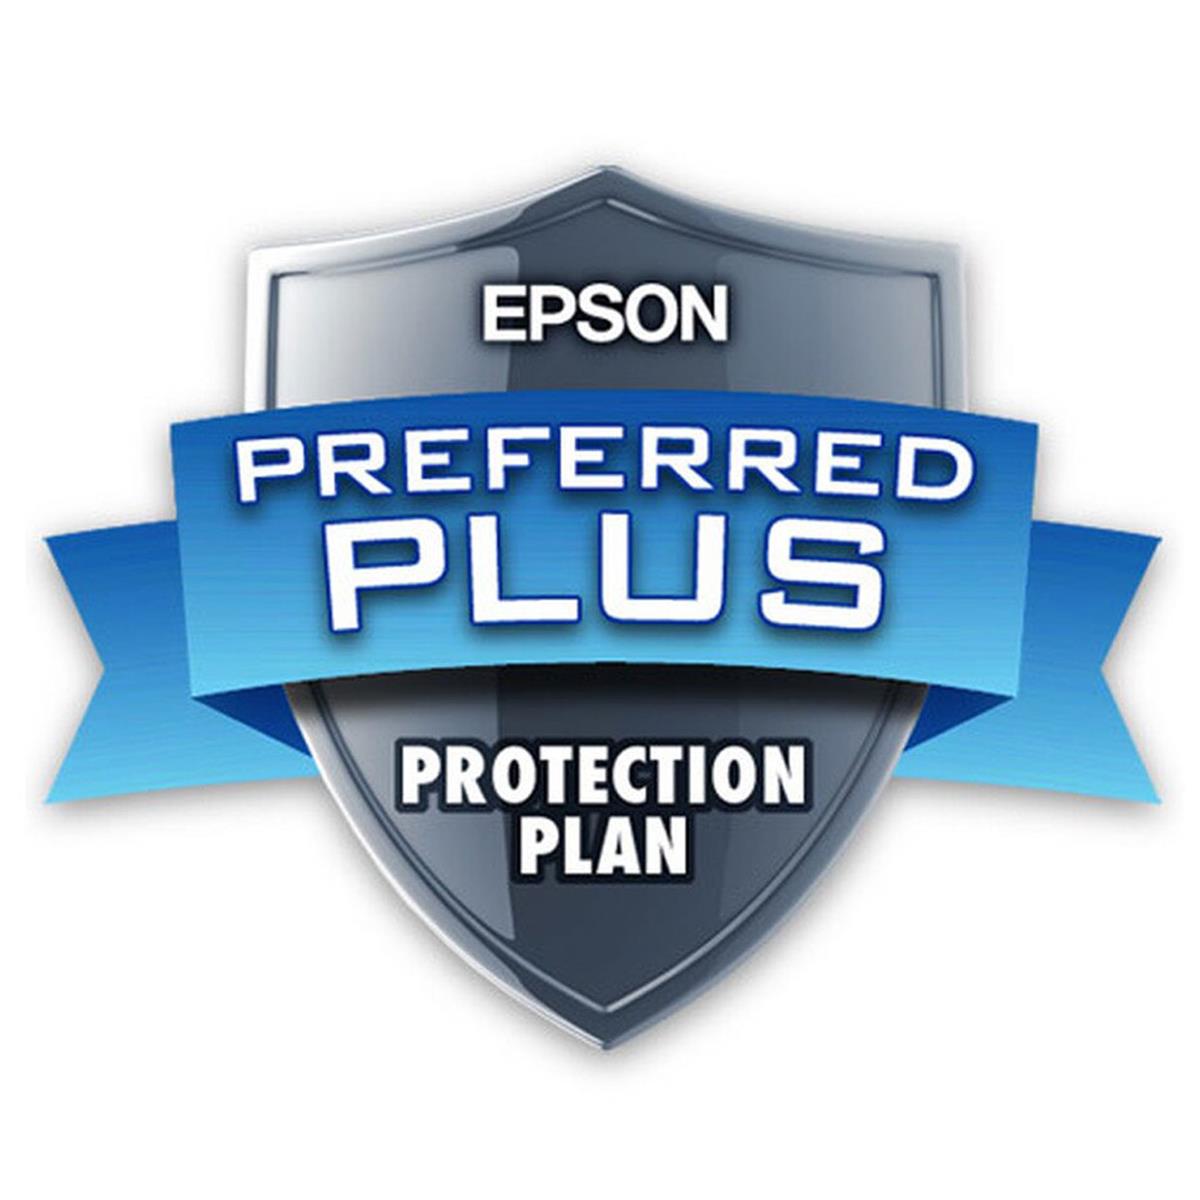 Image of Epson US EPPSNPIJE1 Printer Service